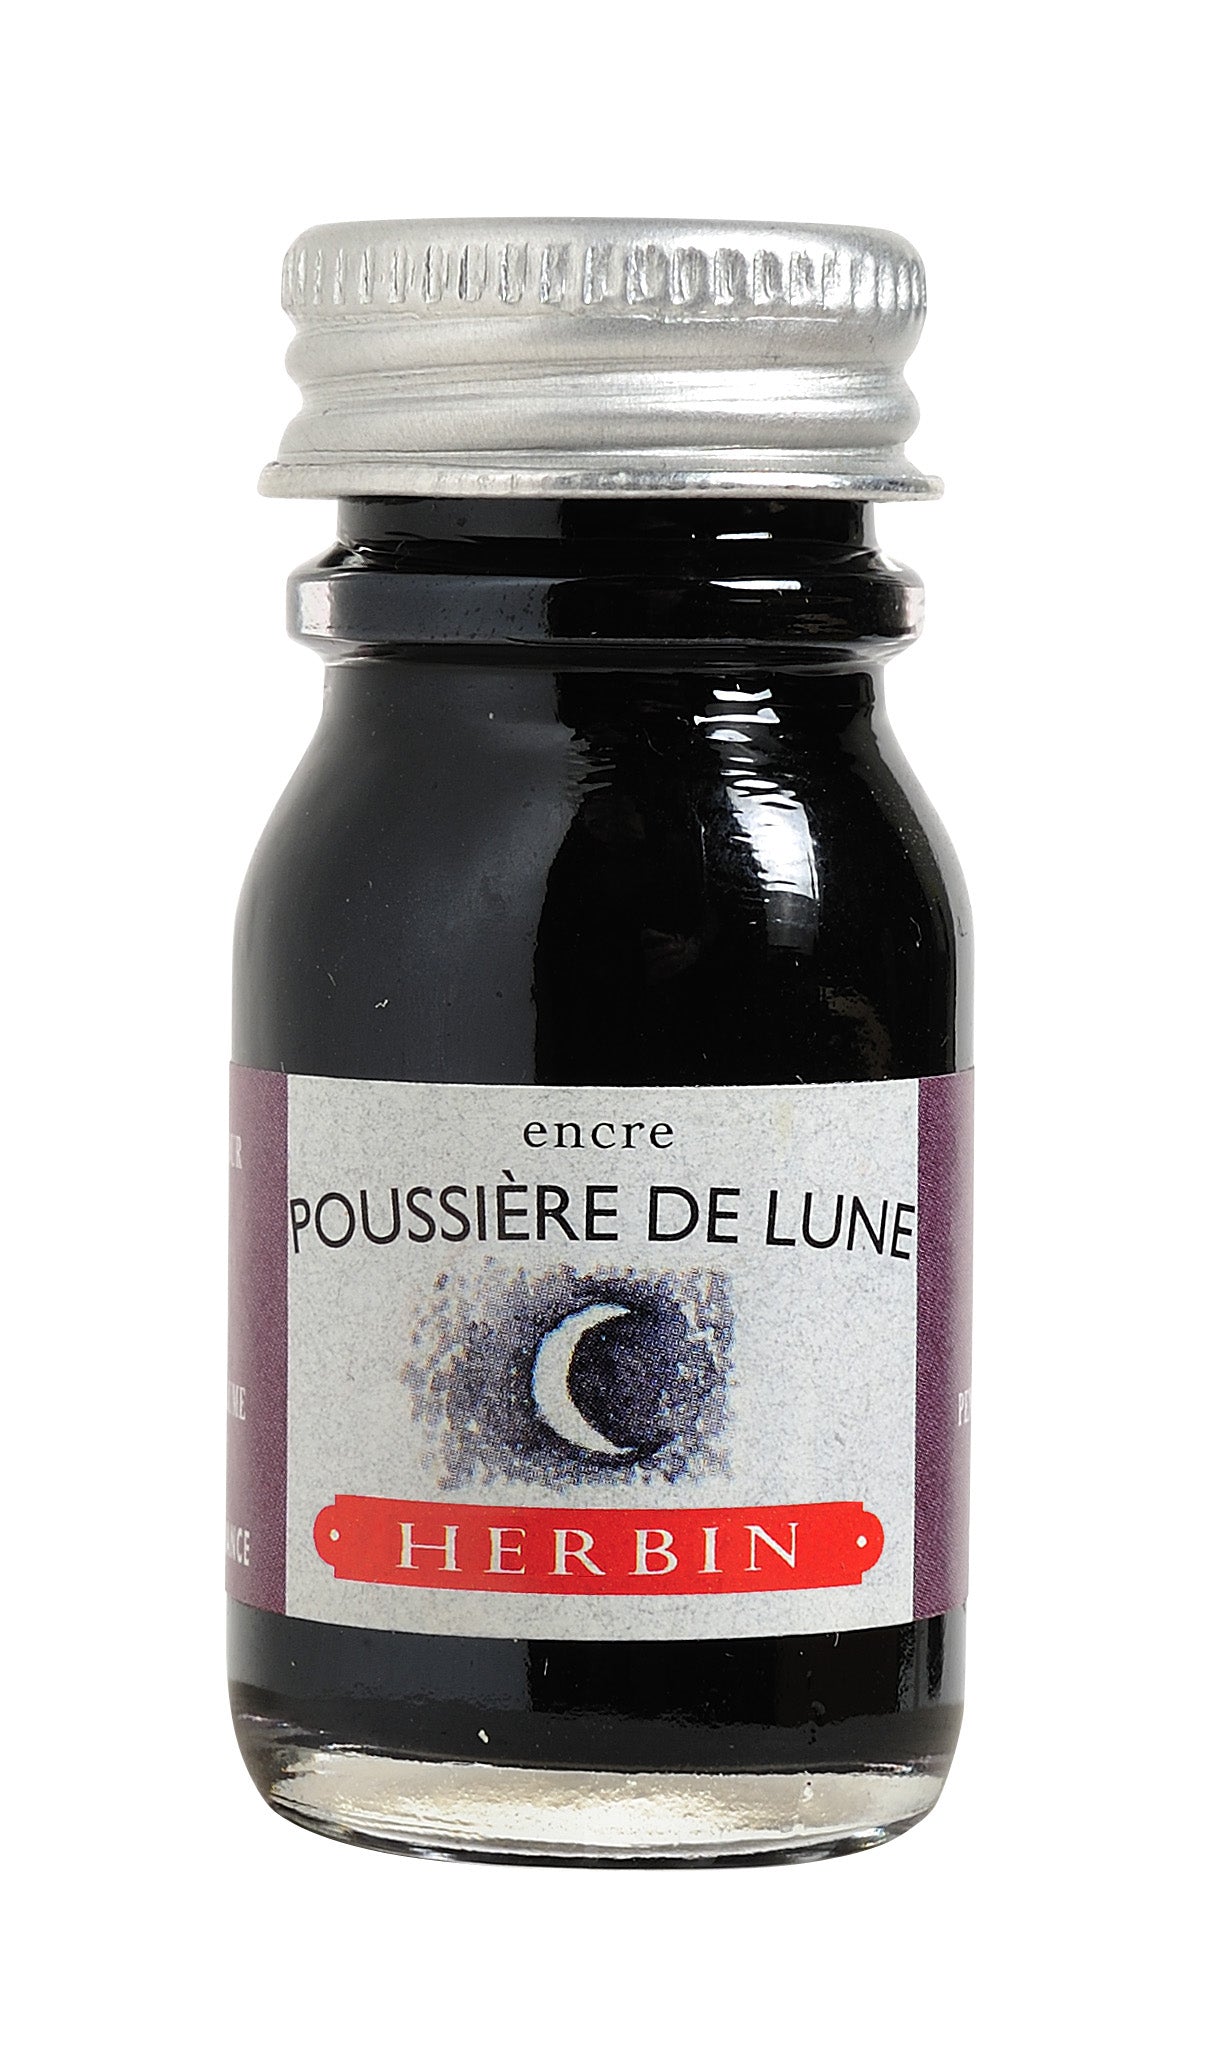 Herbin - Poussiere de lune (mondstaubviolett), 10 ml